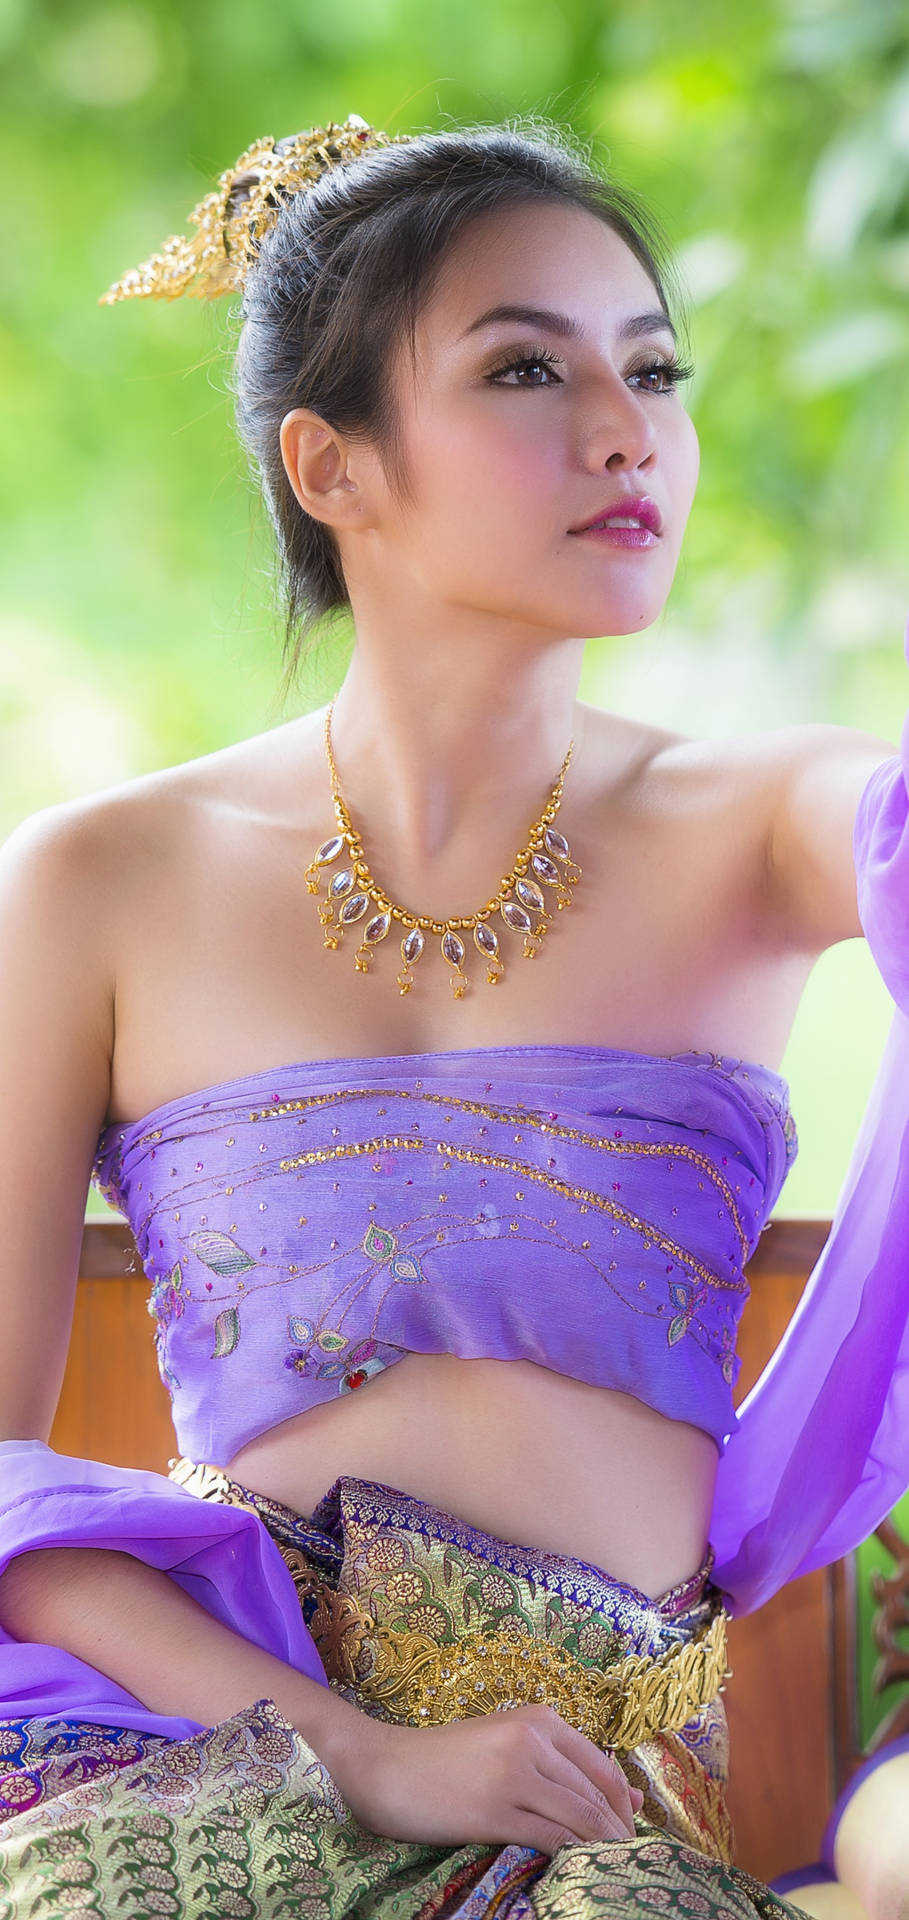 Thailand Woman Lilac Dress Wallpaper